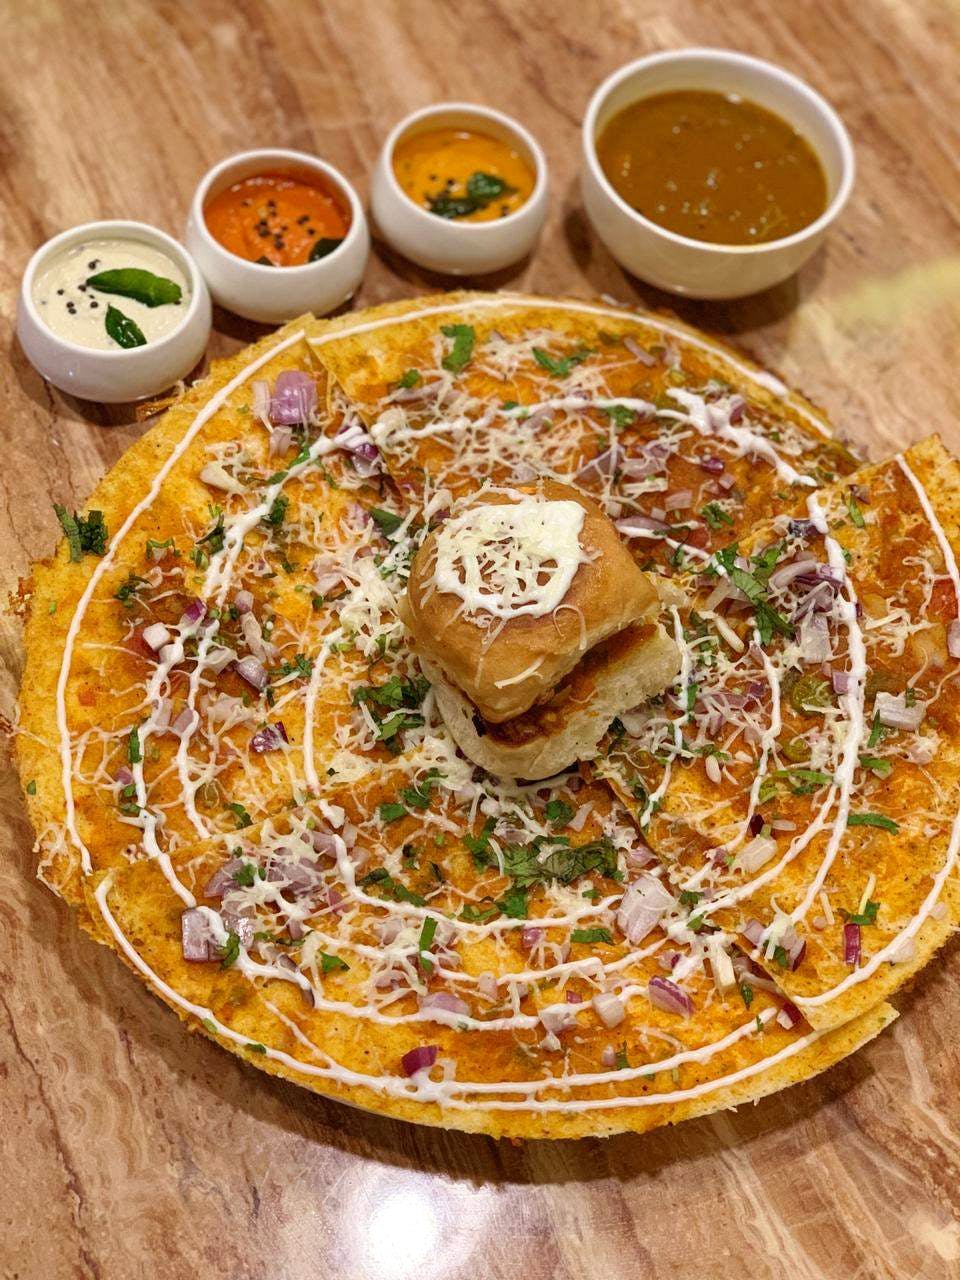 Dish,Food,Cuisine,Ingredient,Produce,Indian cuisine,Recipe,Dal makhani